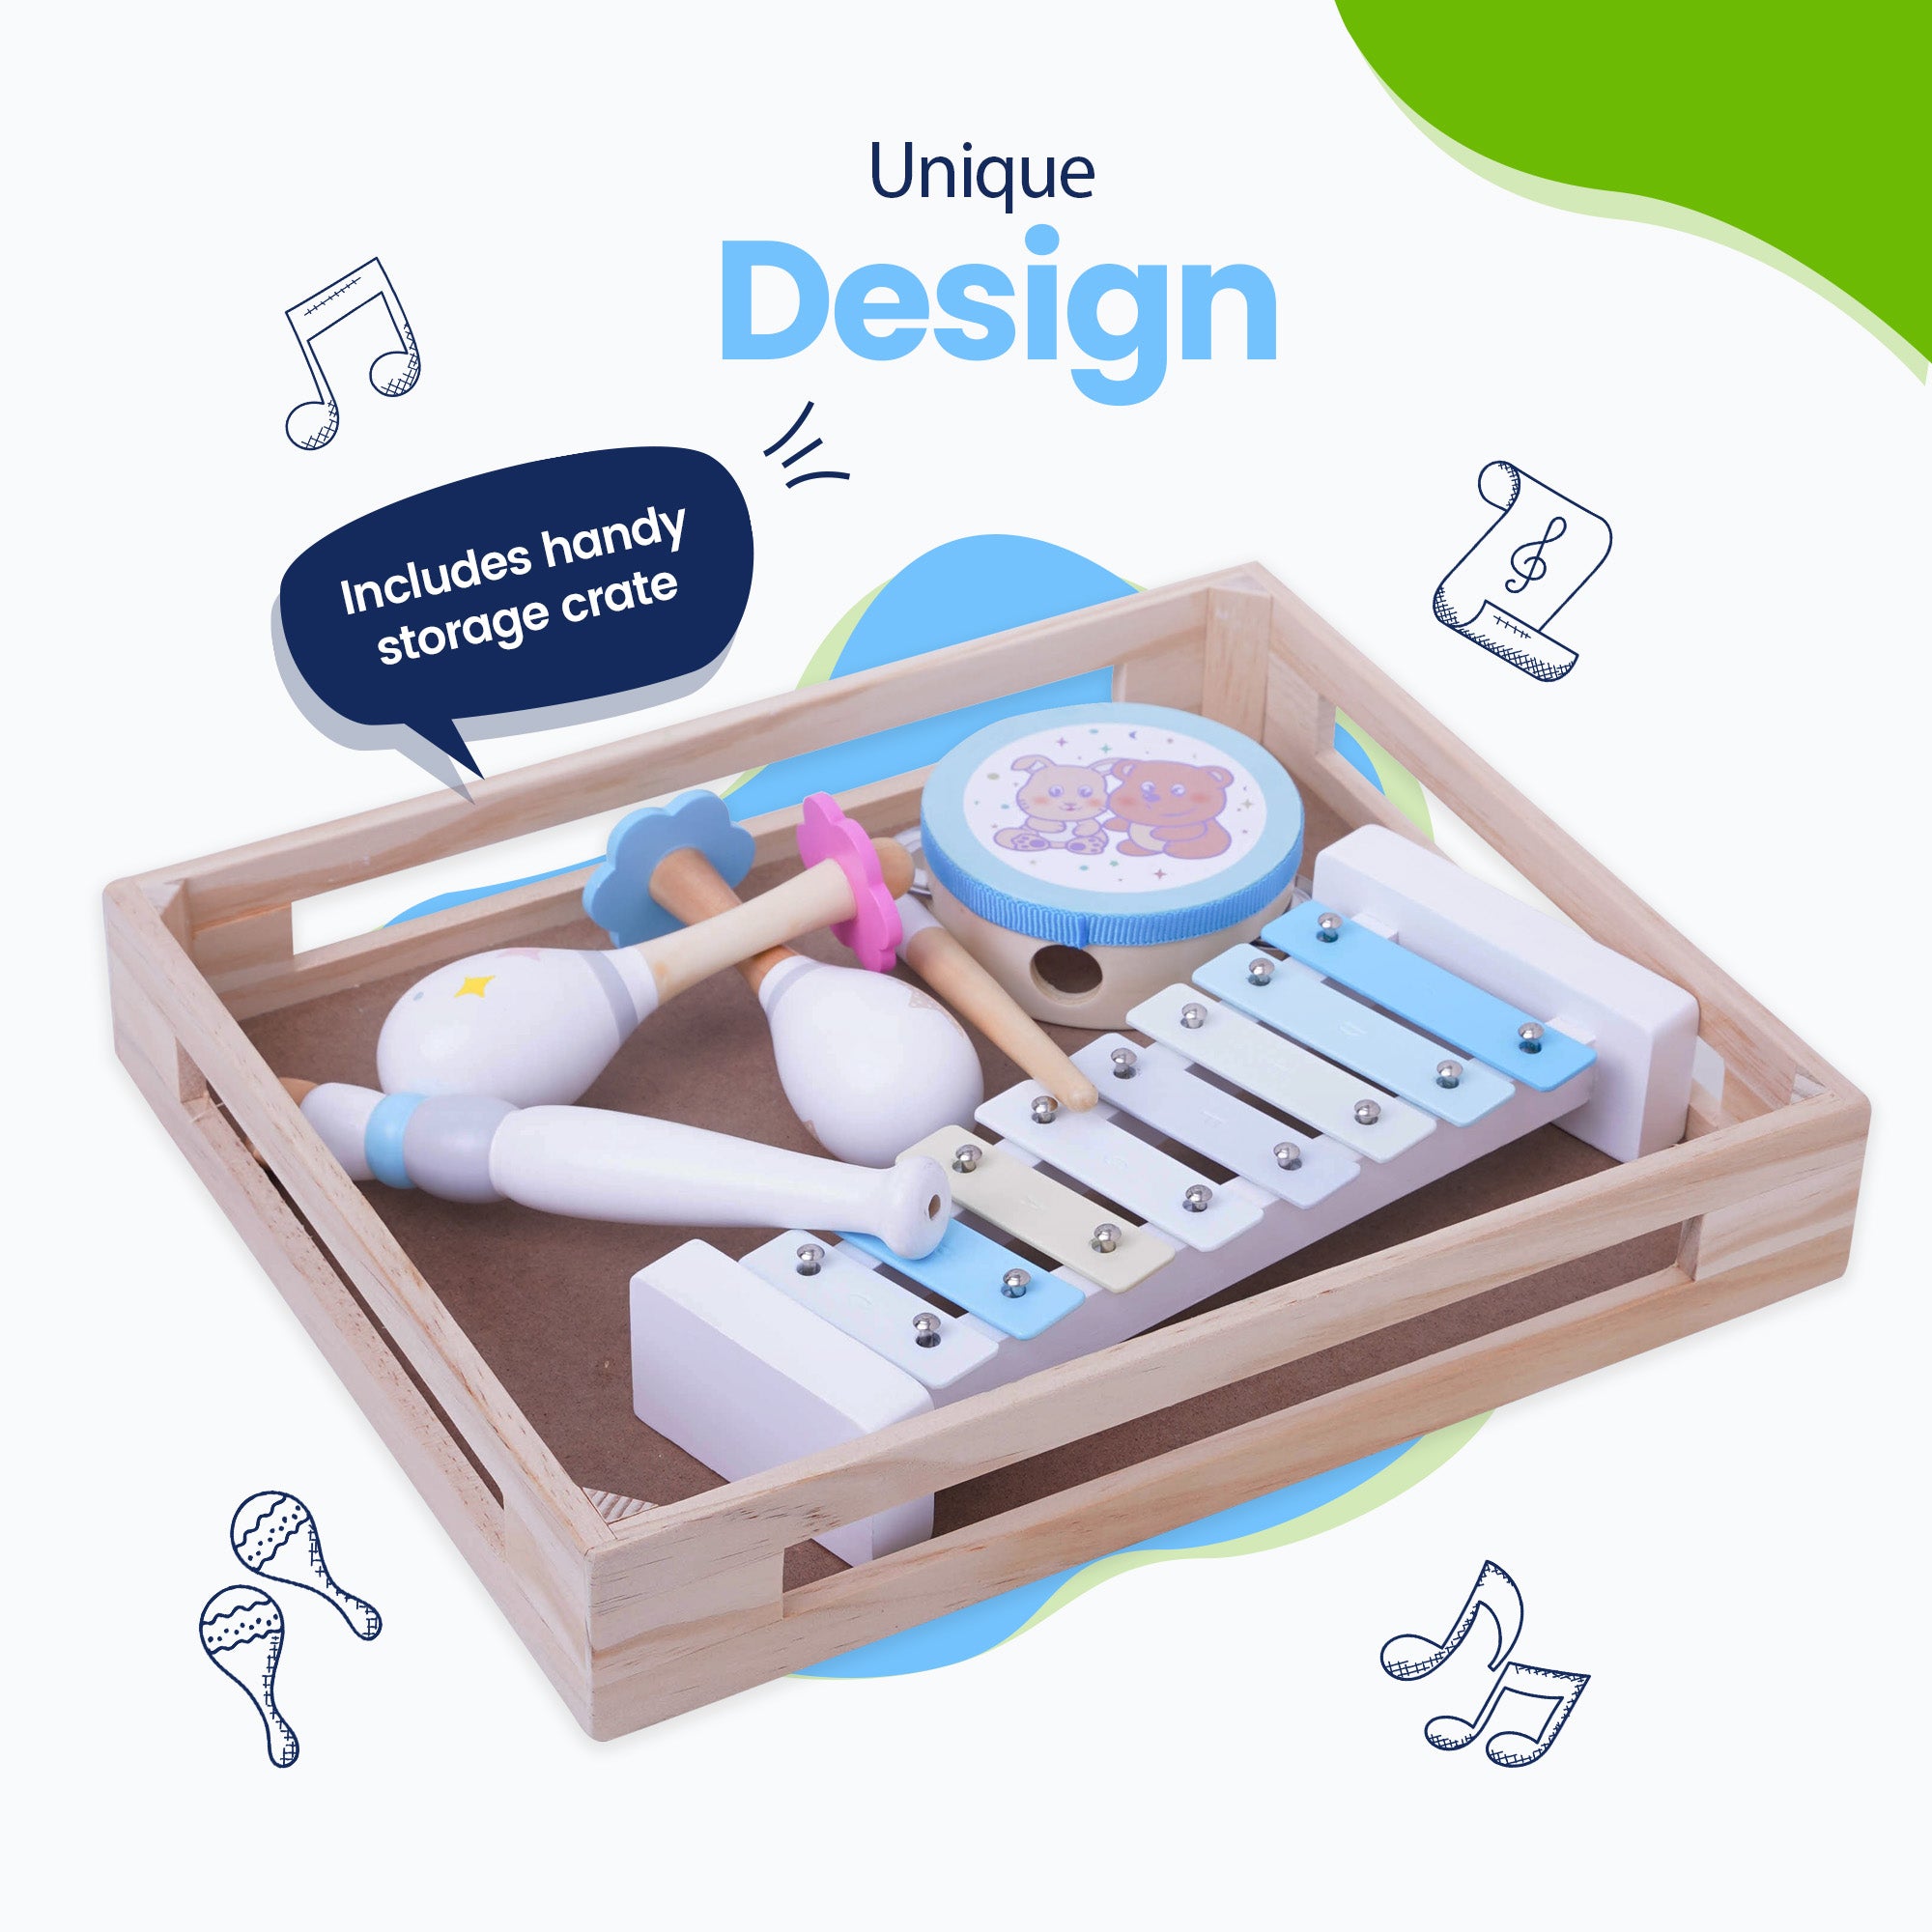 Music set for Children - Unique Design - Includes handy storage crate